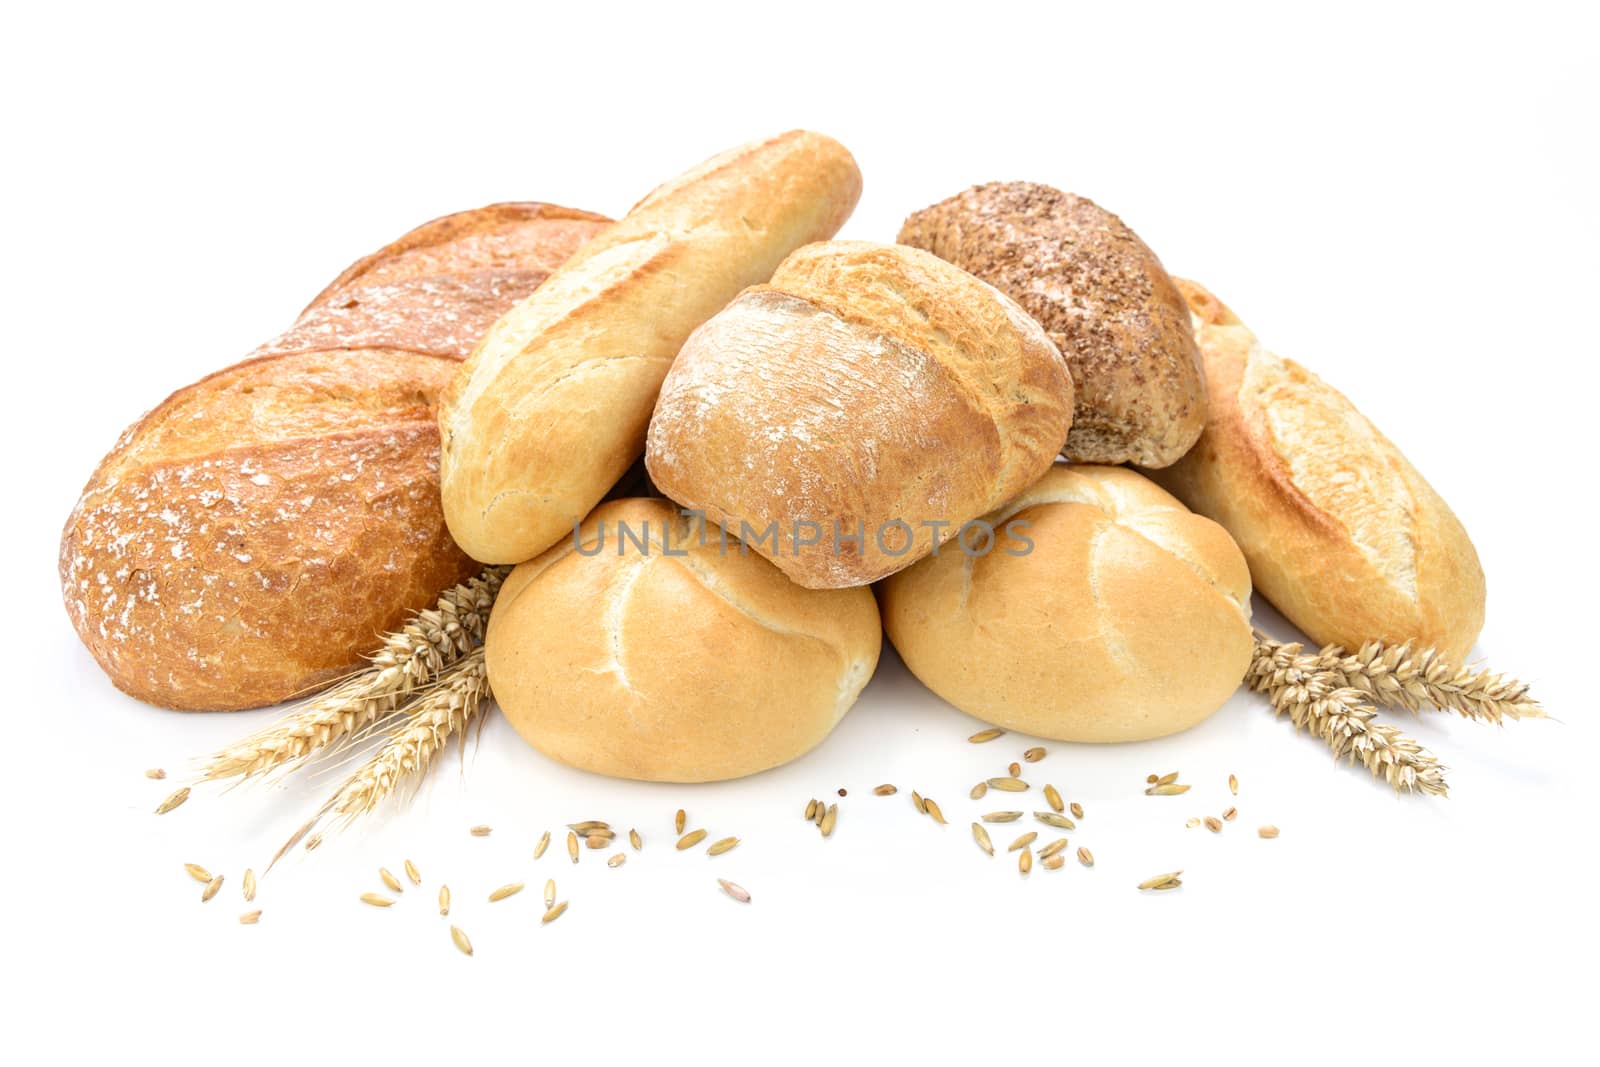 Variety of fresh breads by wdnet_studio